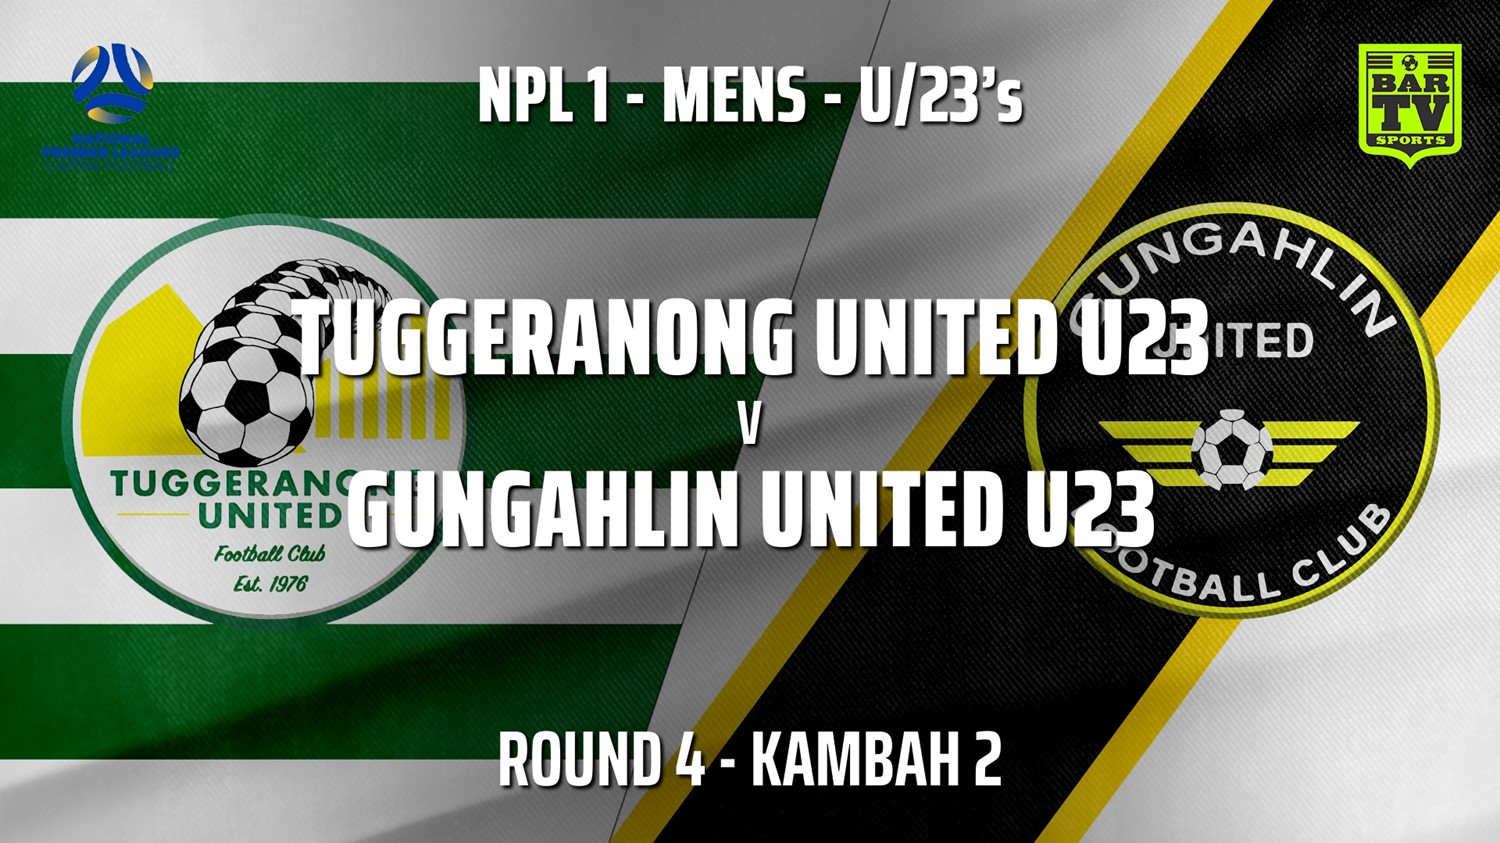 210502-NPL1 U23 Capital Round 4 - Tuggeranong United U23 v Gungahlin United U23 Minigame Slate Image